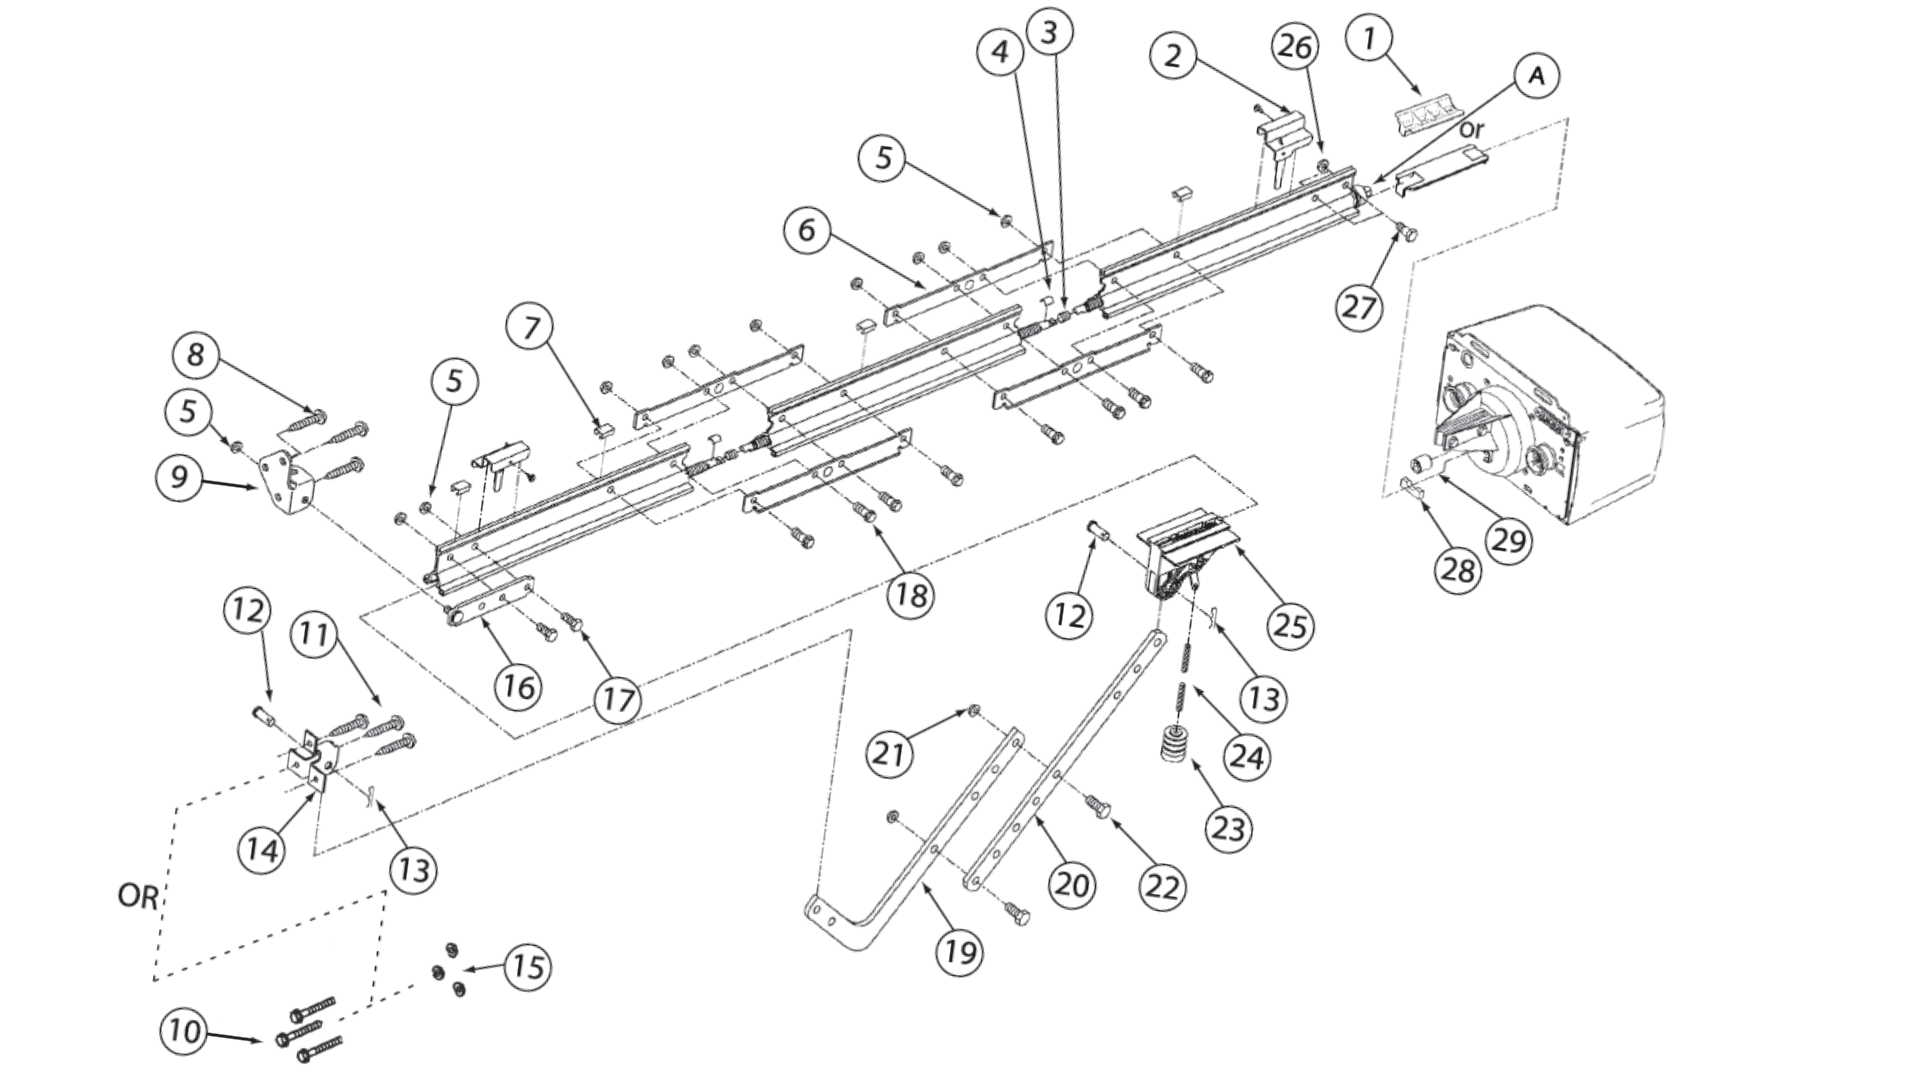 Genie AC Screw Drive garage door opener diagram of replacement parts for the screw rail